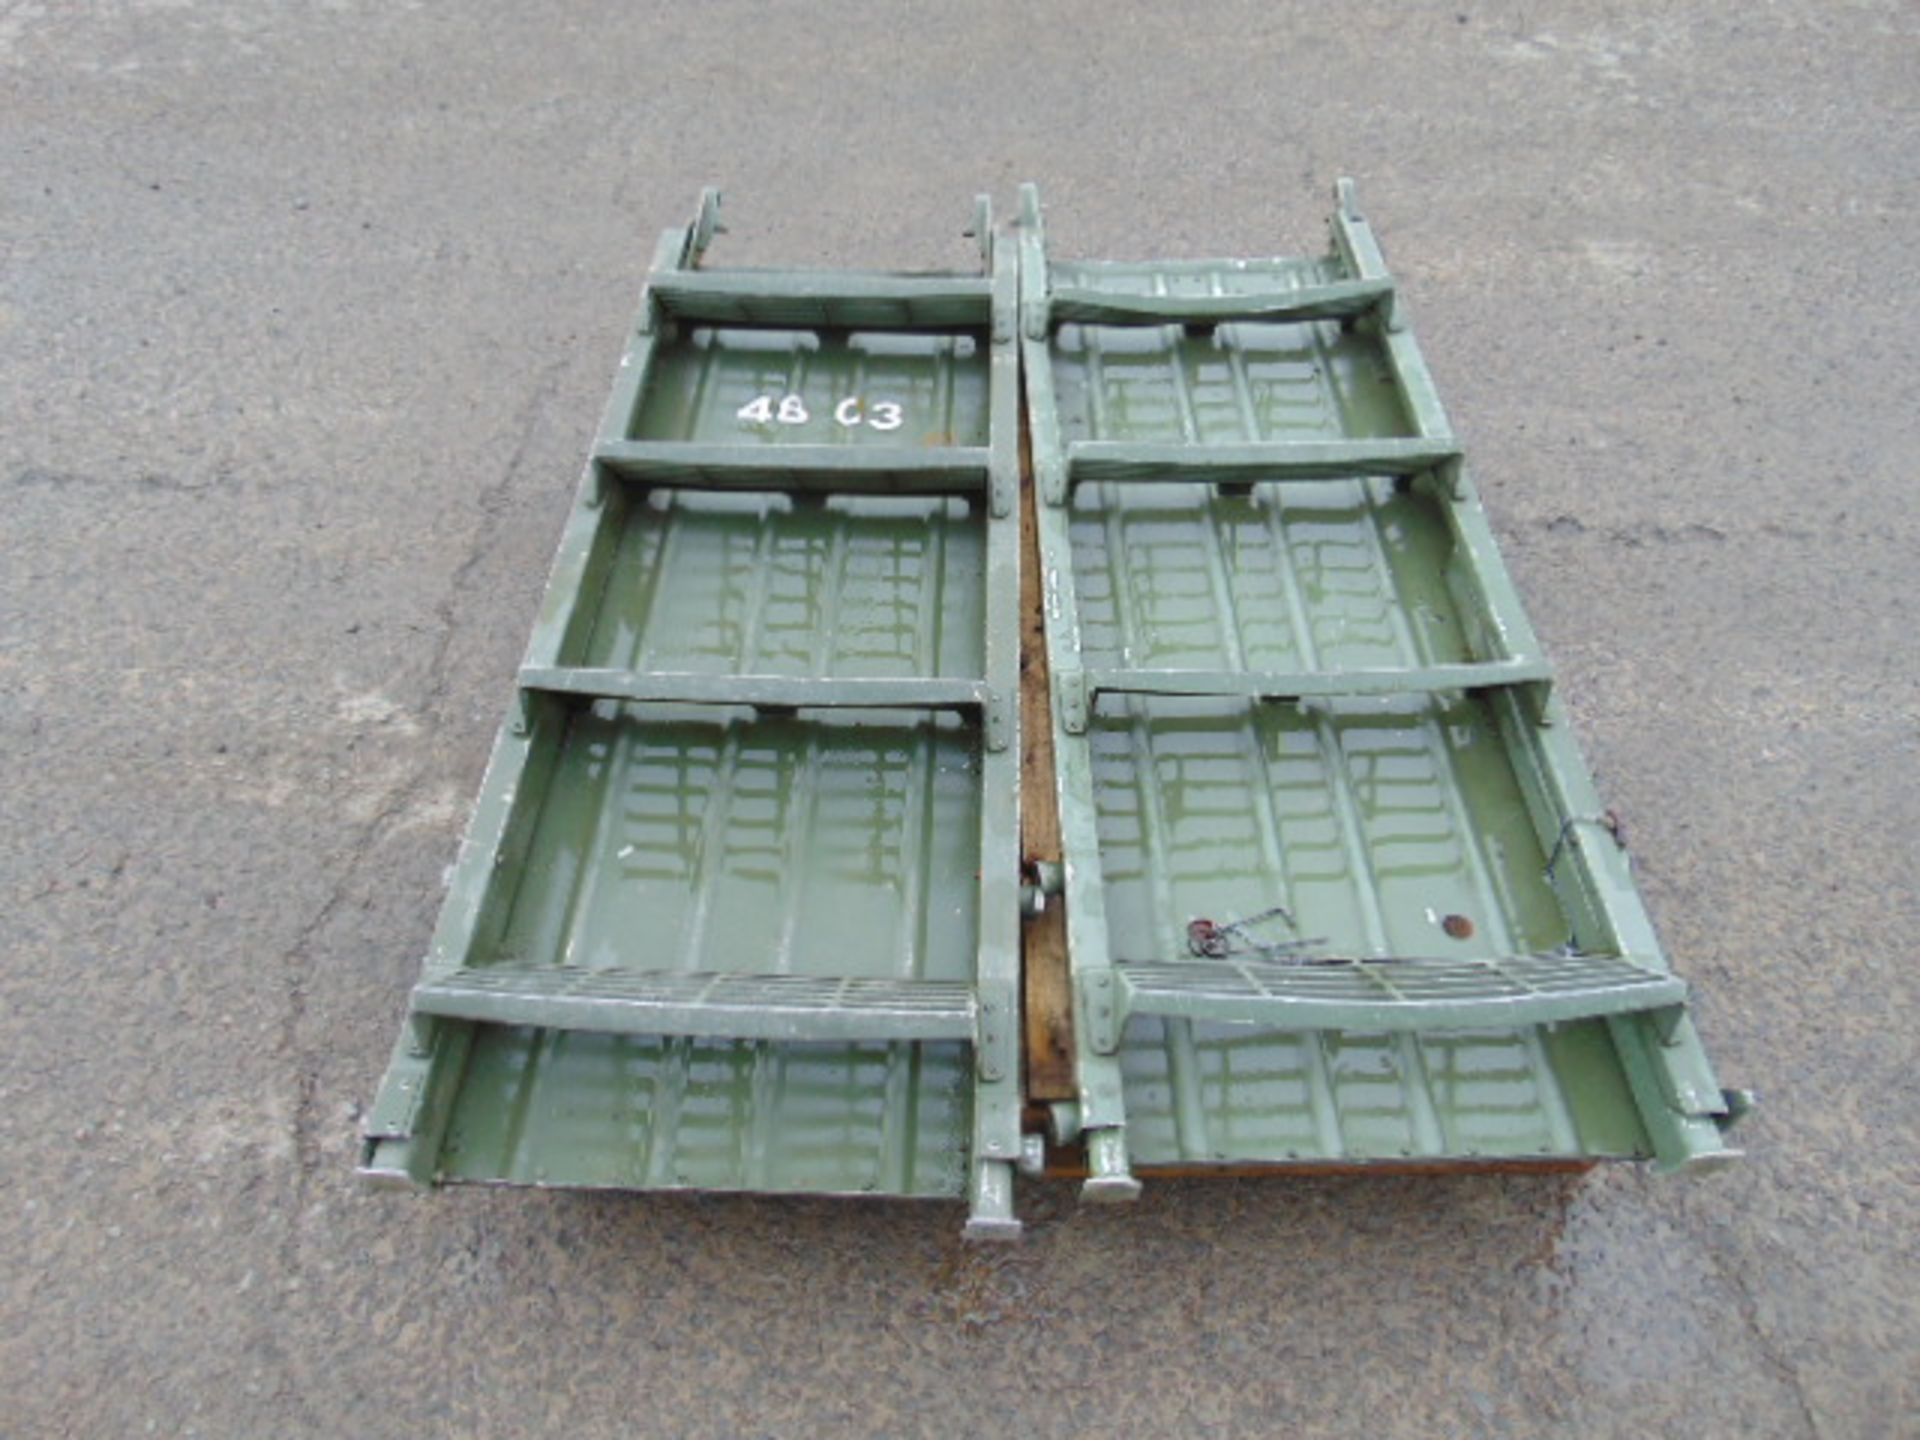 2 x 1.3m 4 Step Vehicle Ladders - Image 3 of 6